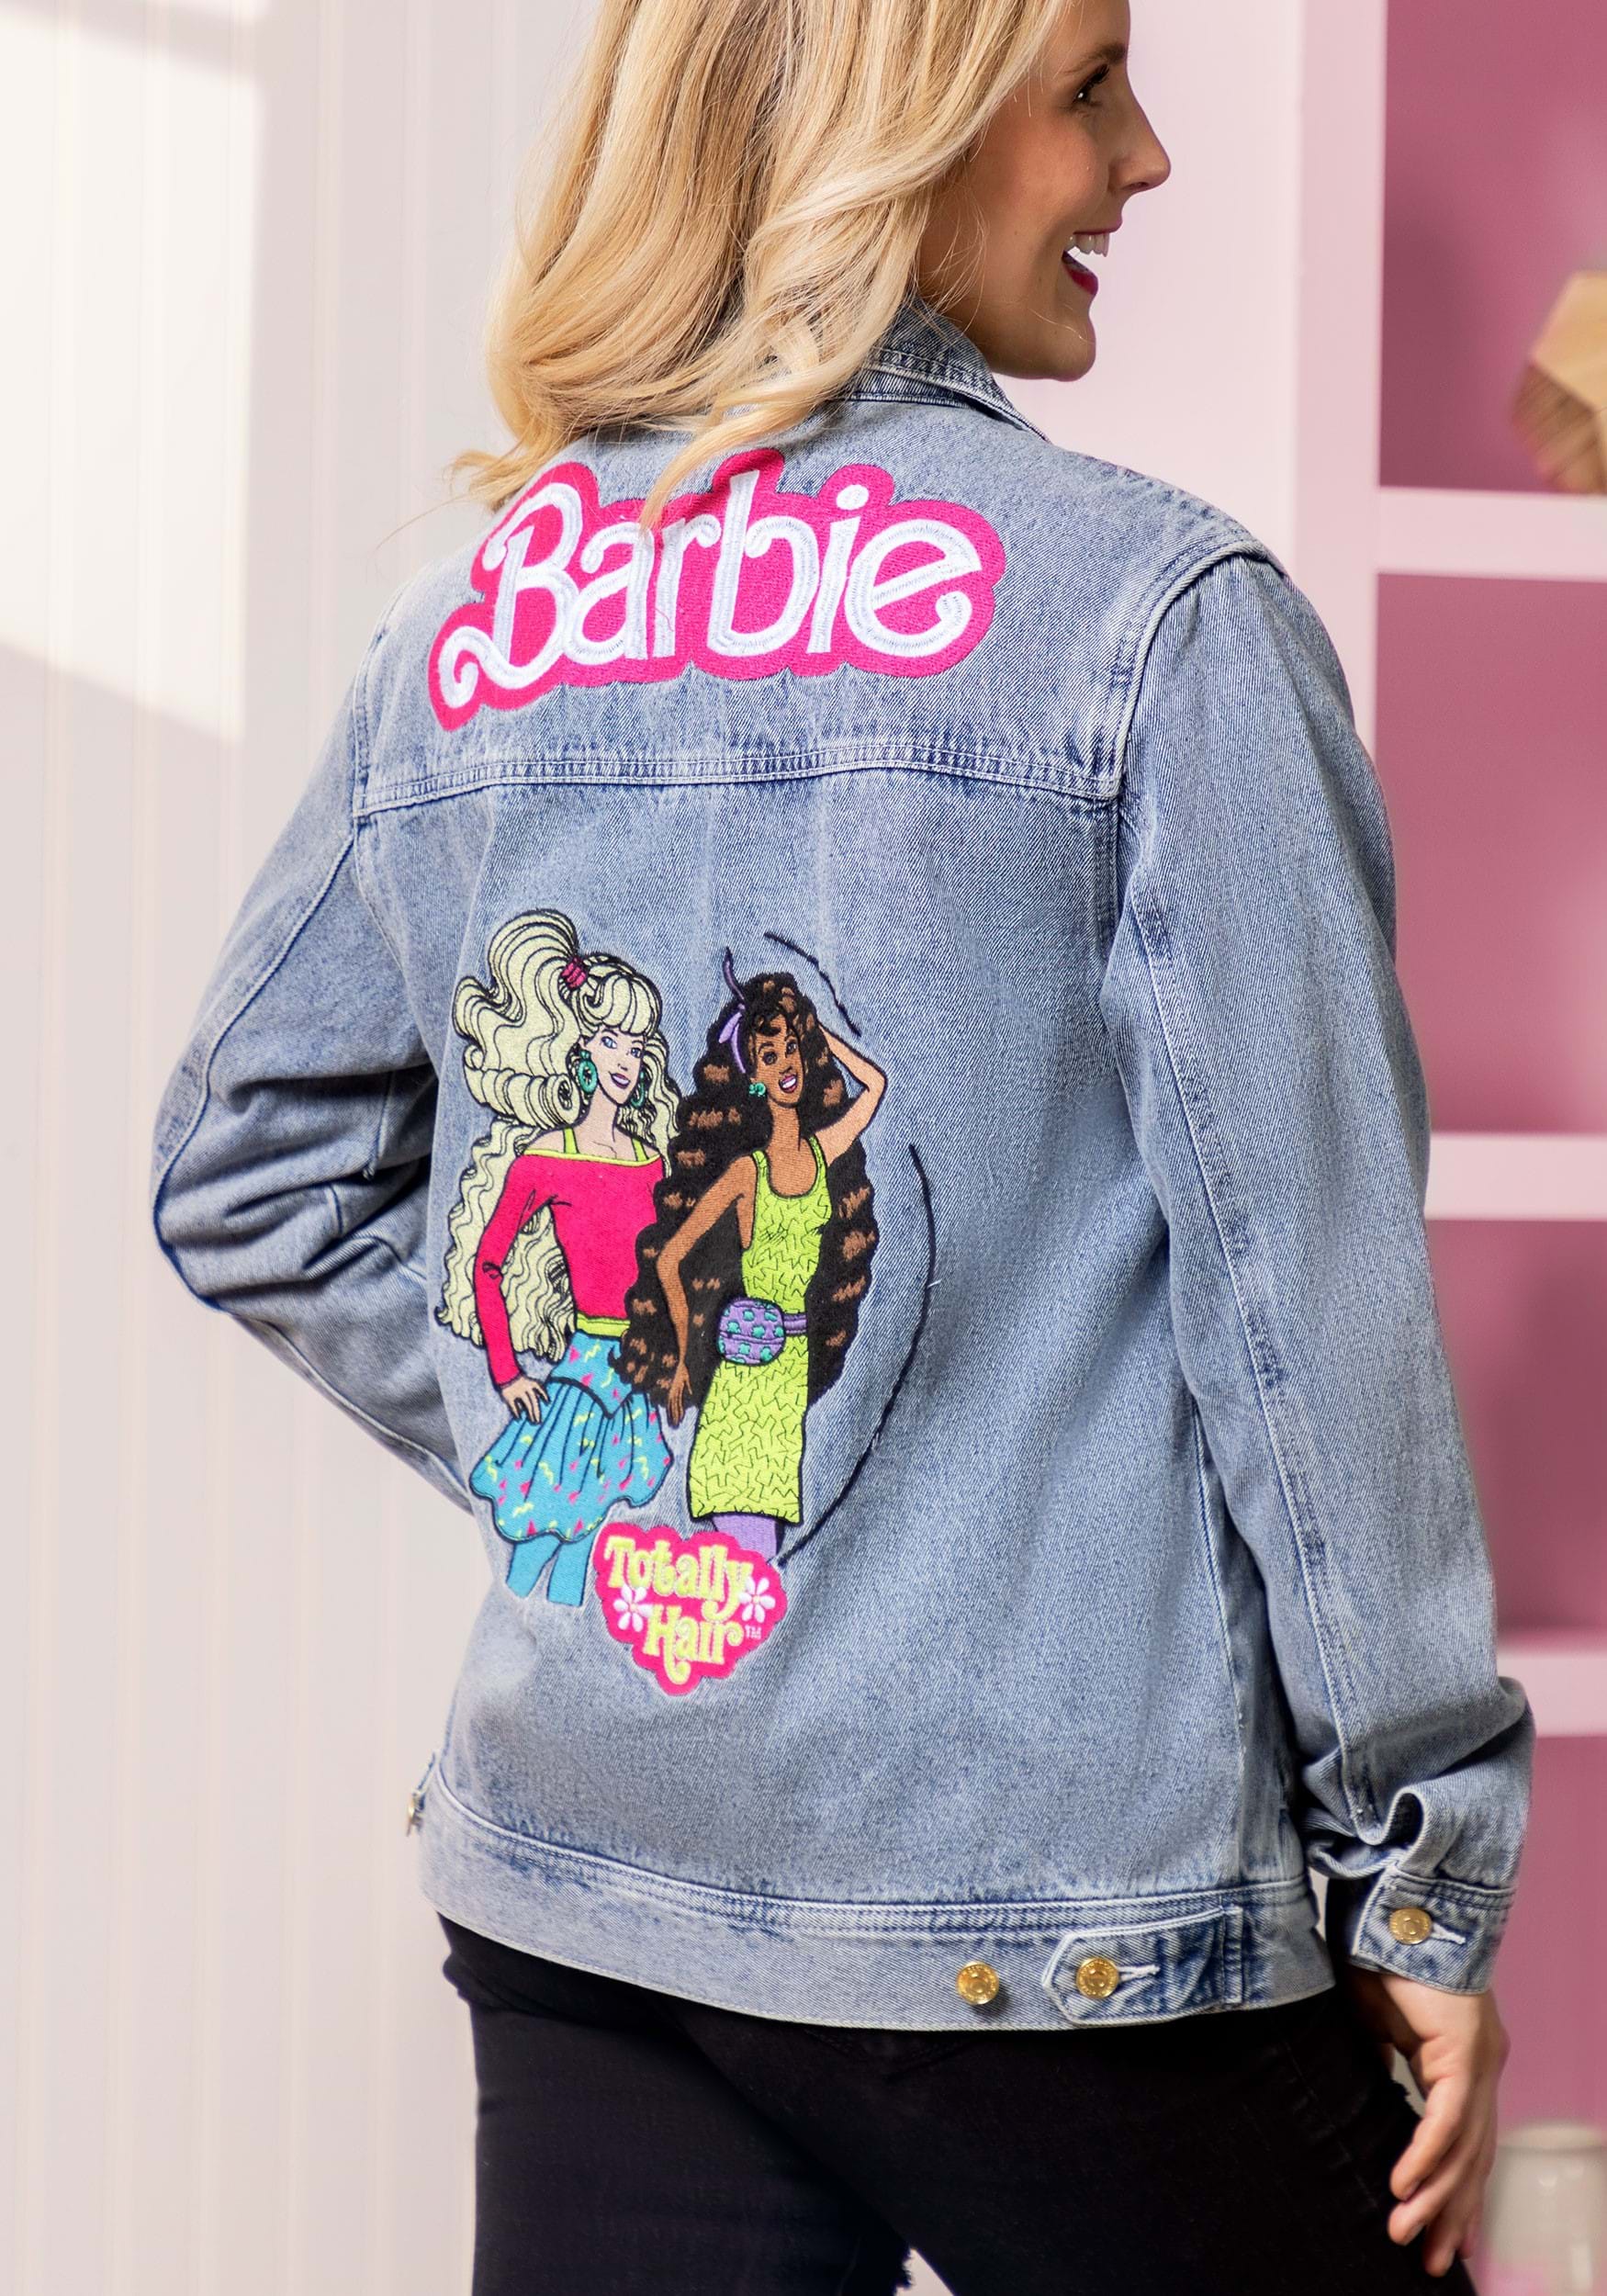 Barbie jacket XL SOLD OUT !! www.ugel01ep.gob.pe